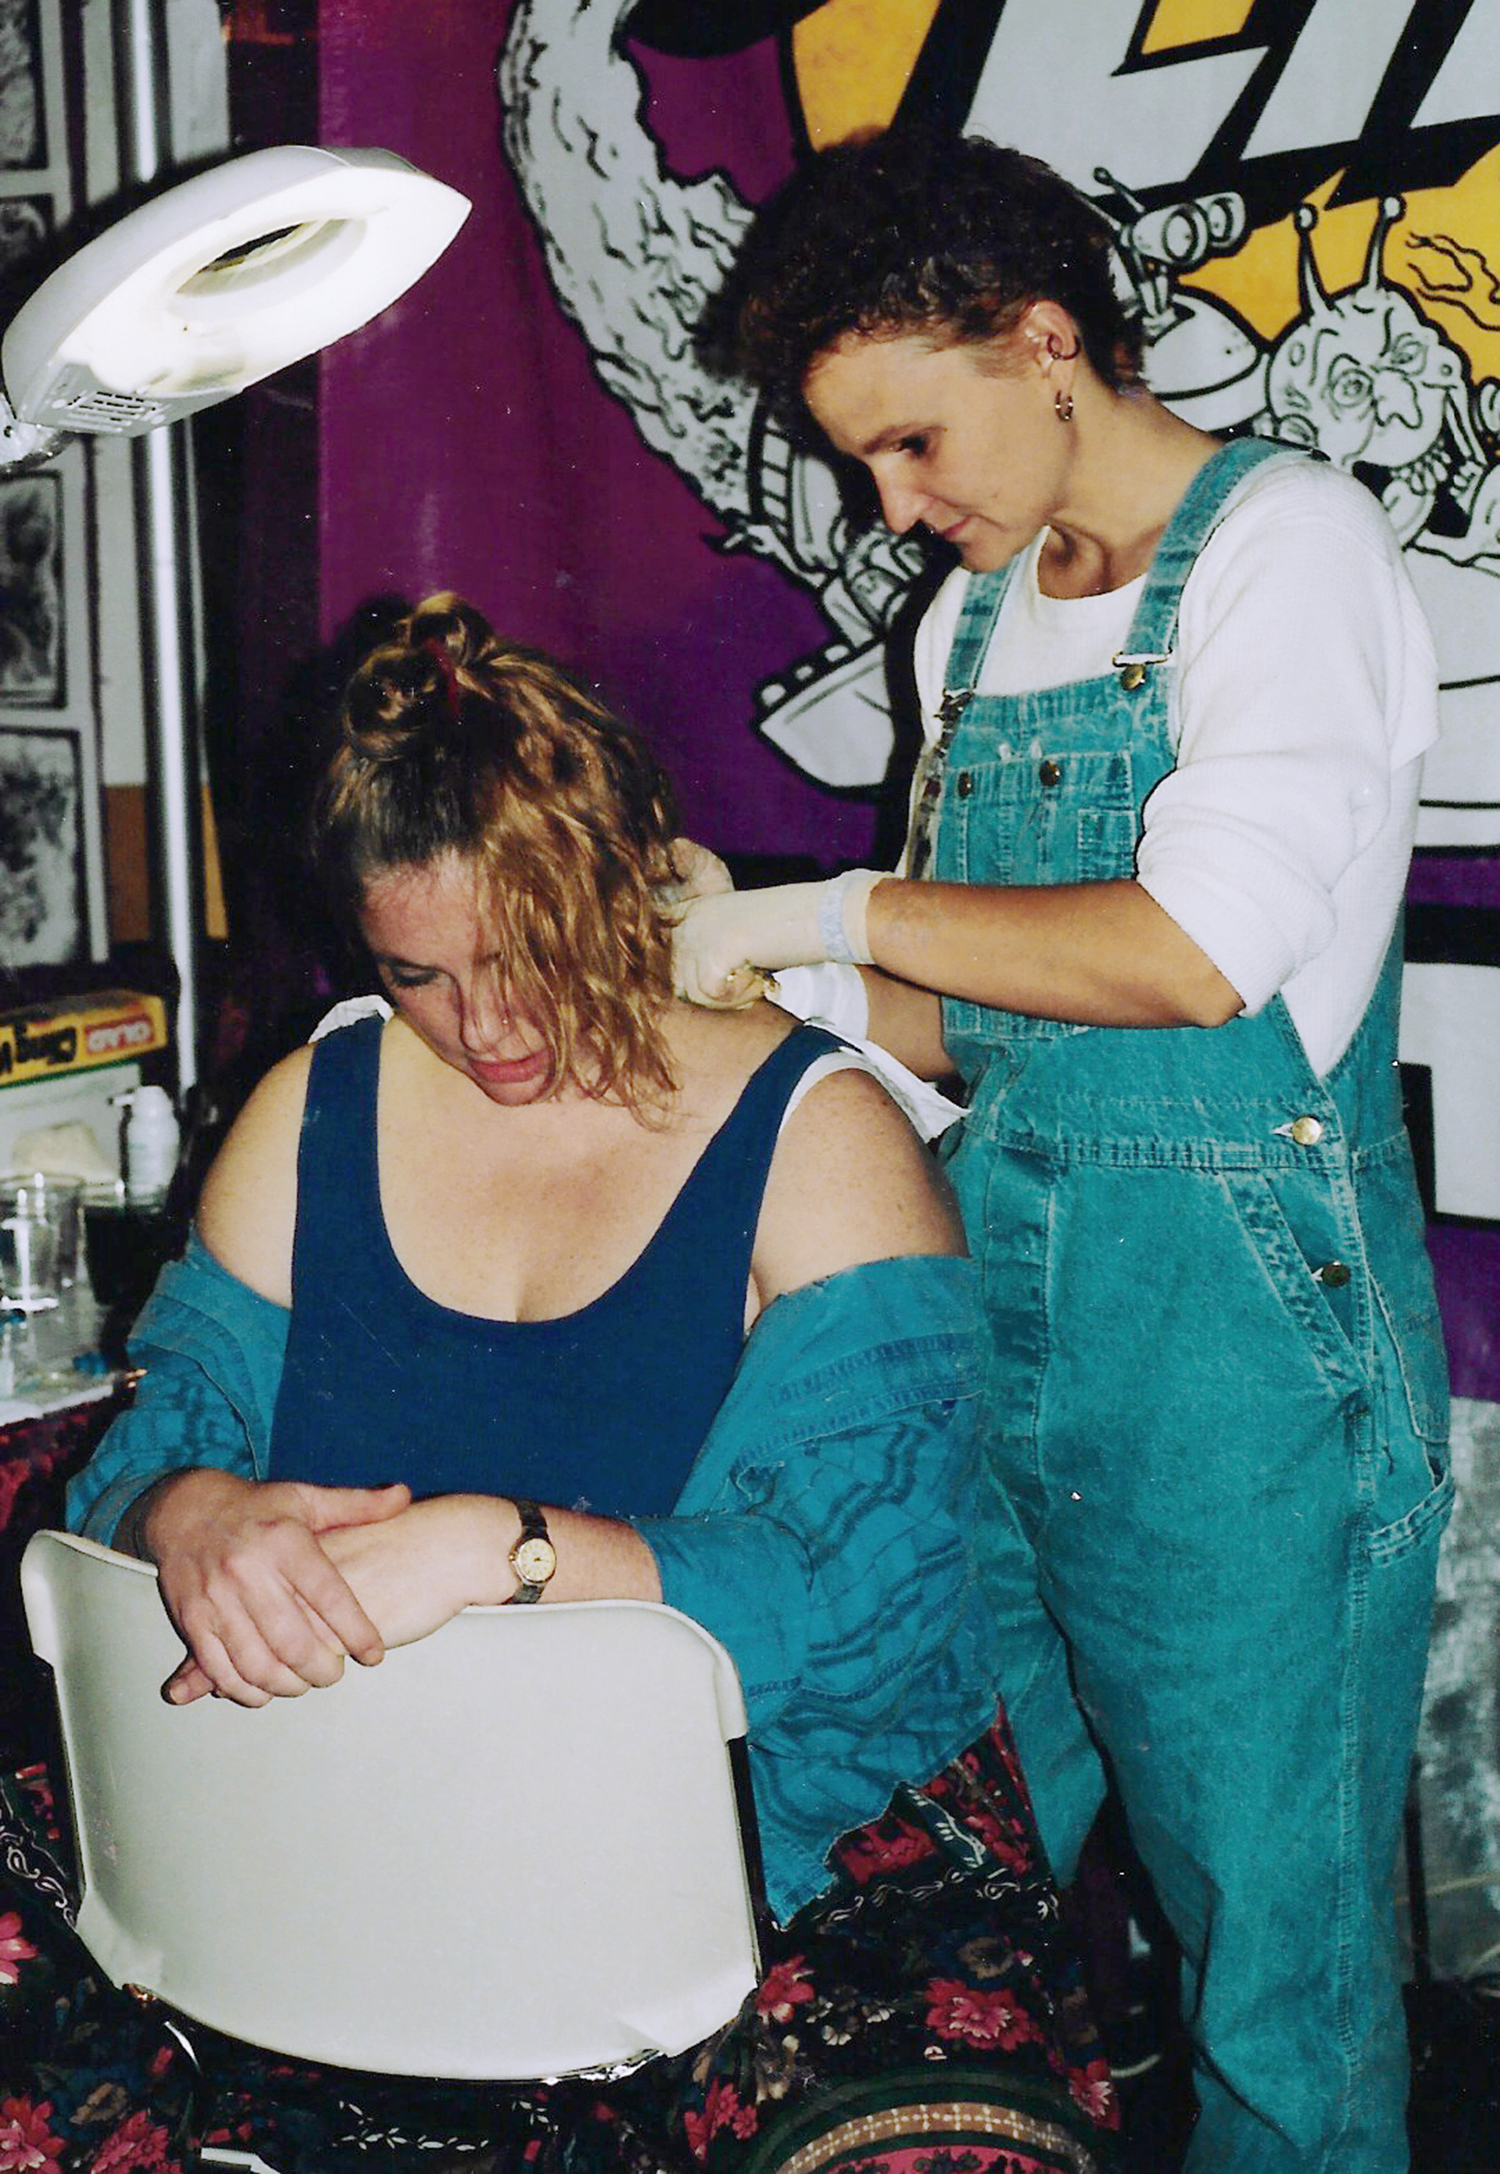 kari barba at her anaheim studio, tattooing client, in 1990s - tattoo history, legend